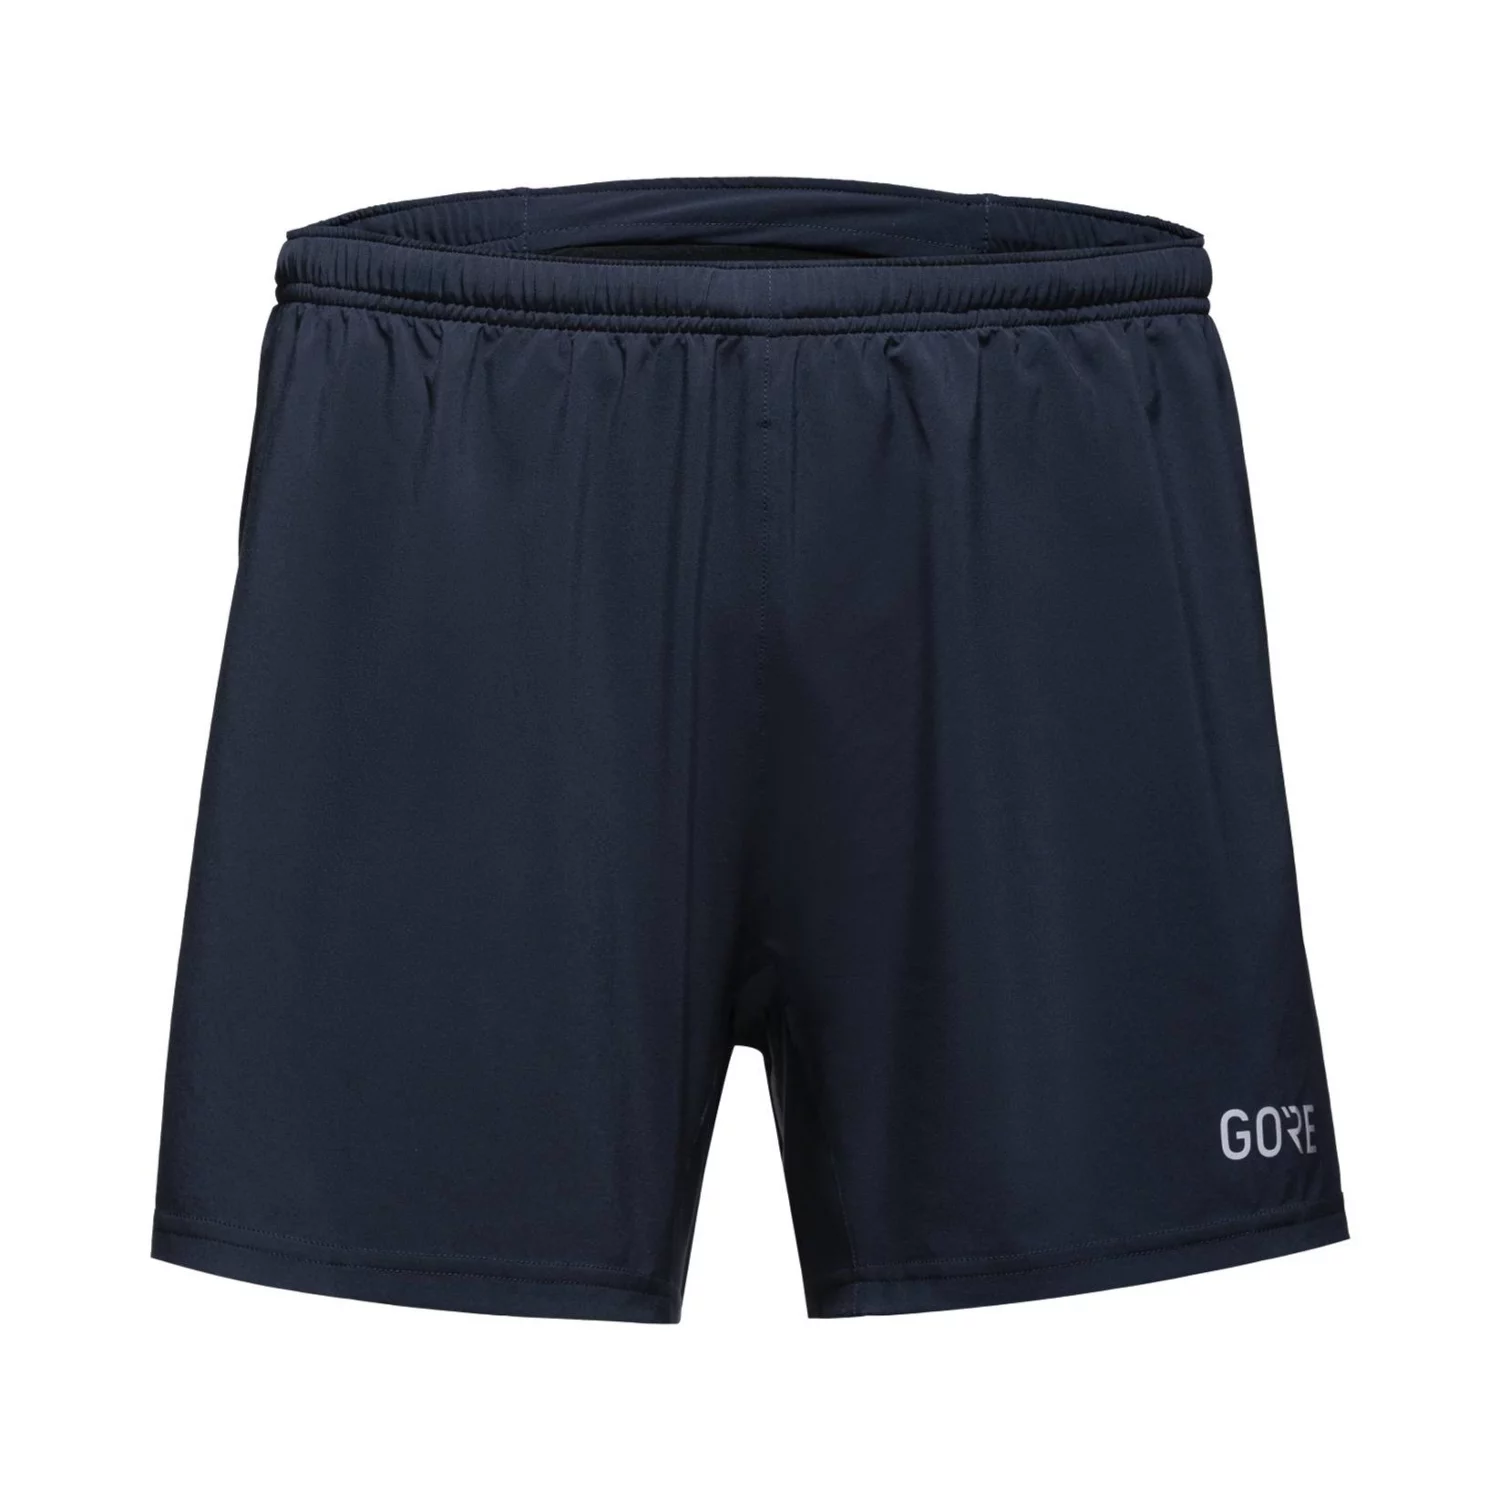 GORE R5 5 Inch Shorts XL dark blue